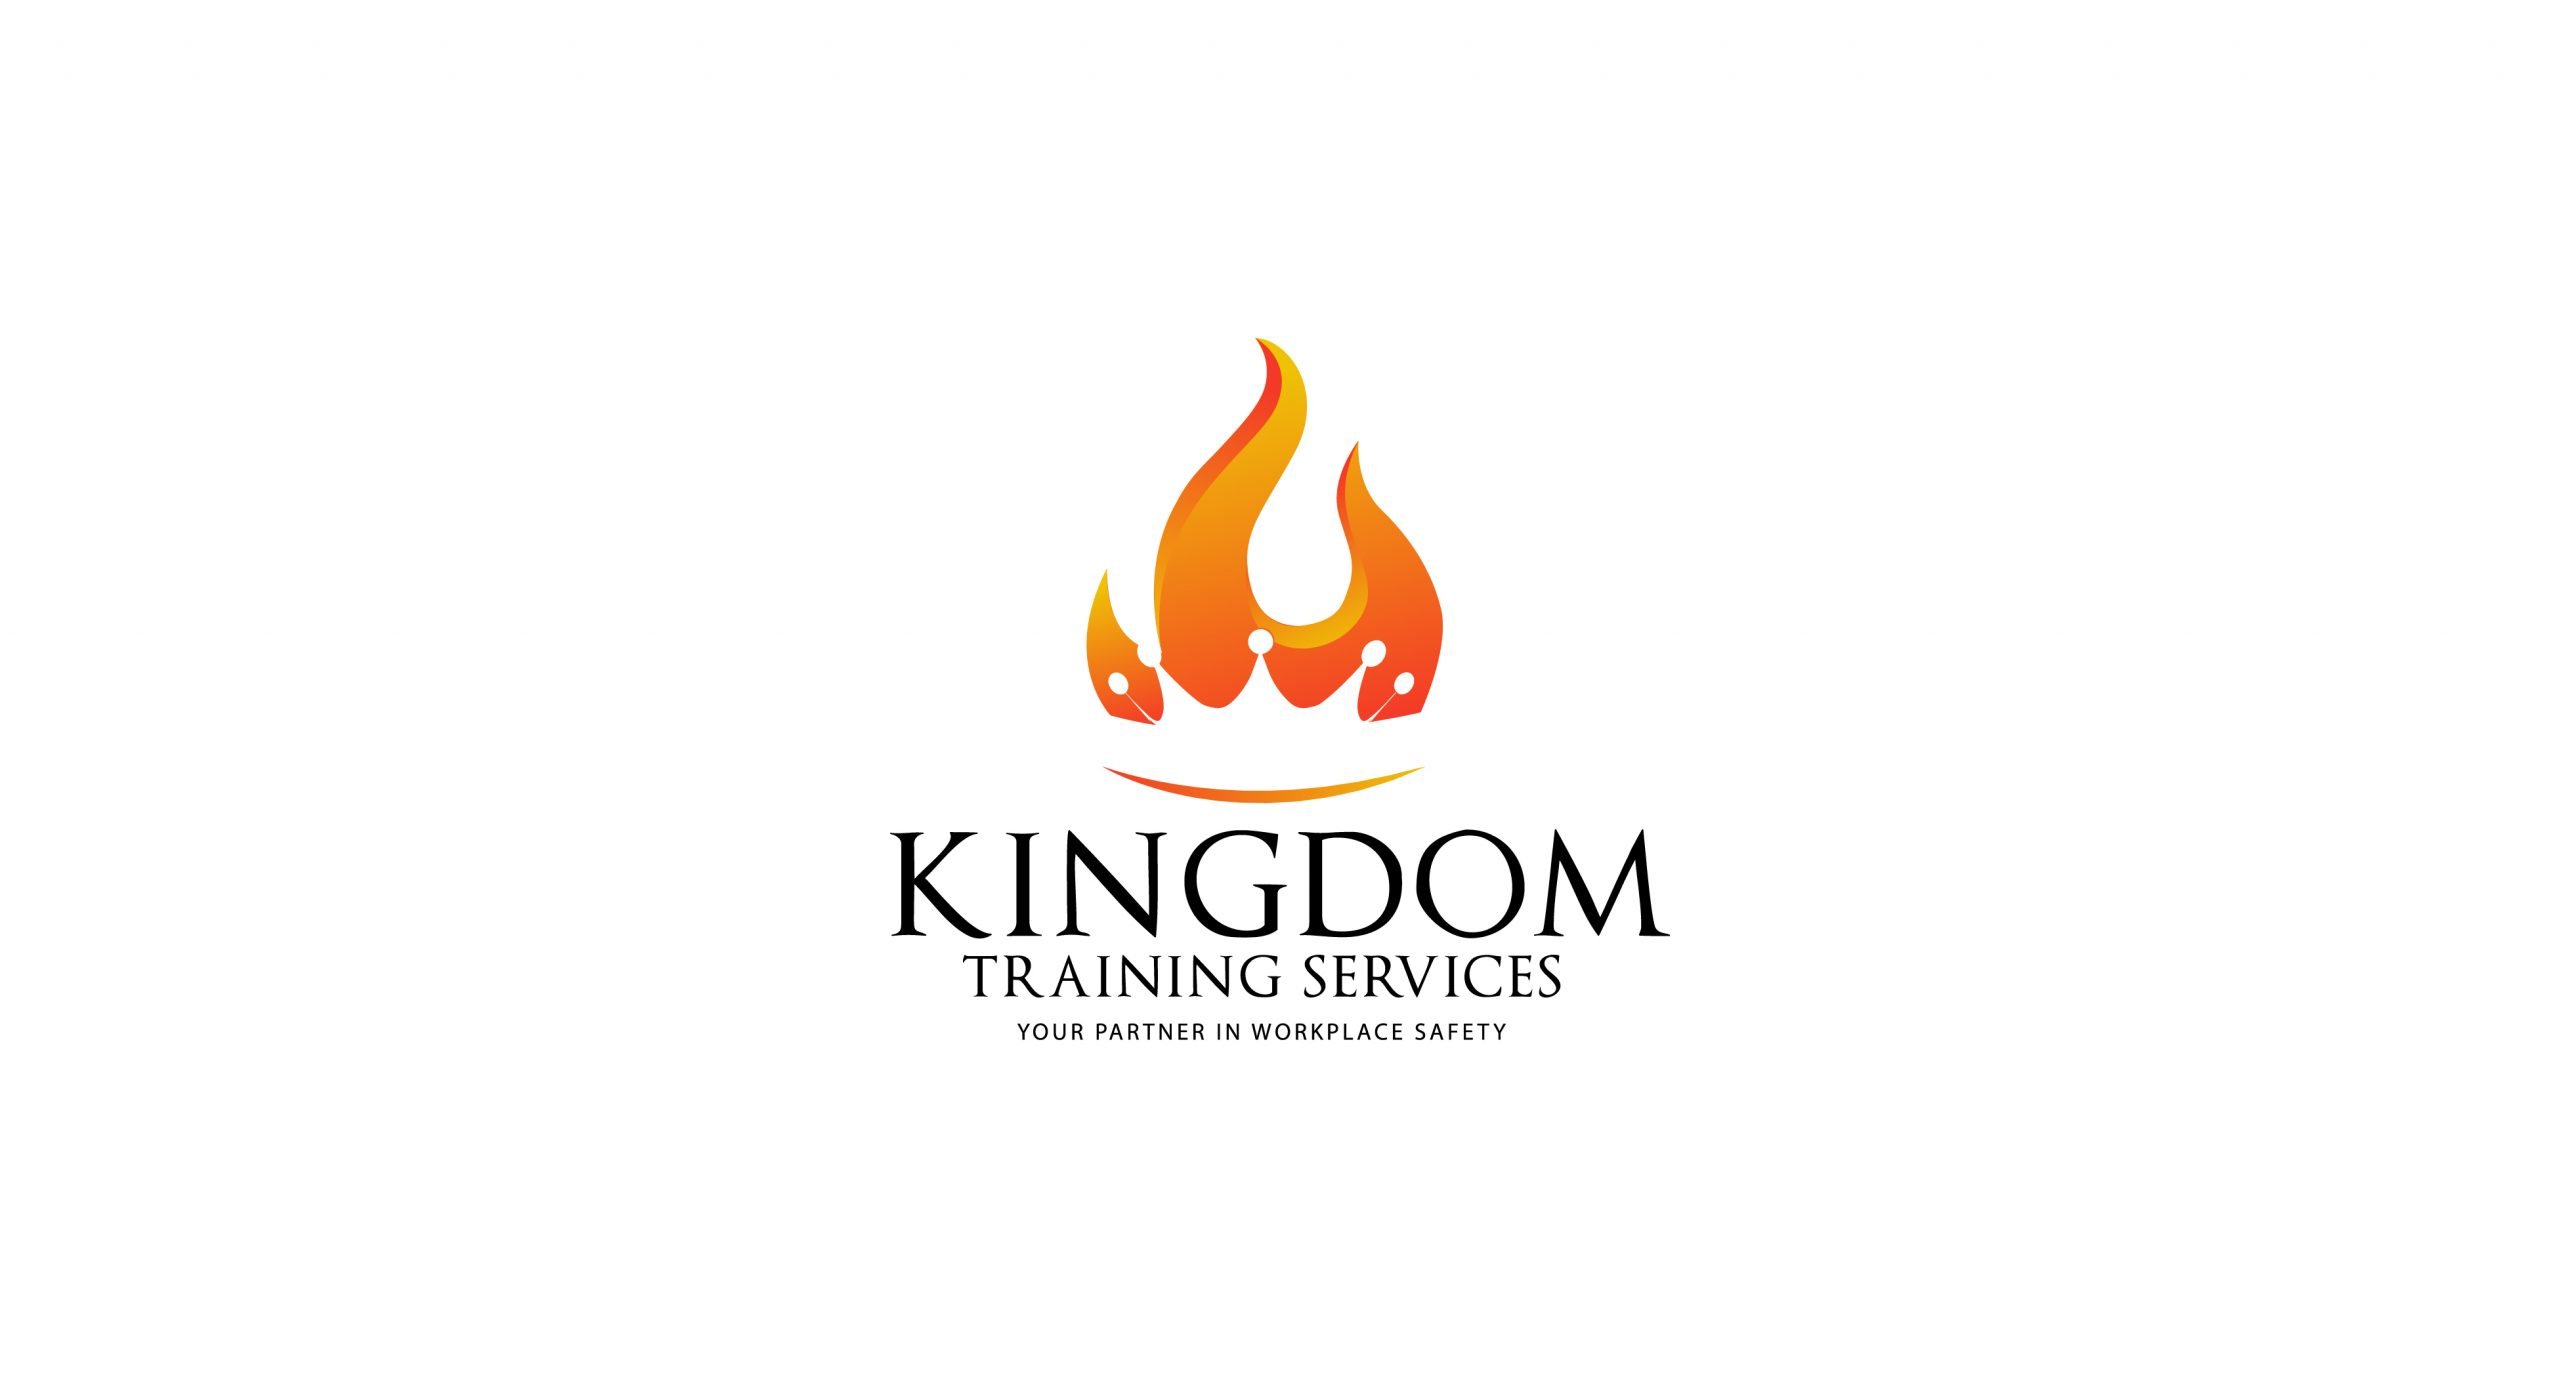 Kingdom Training Services logo